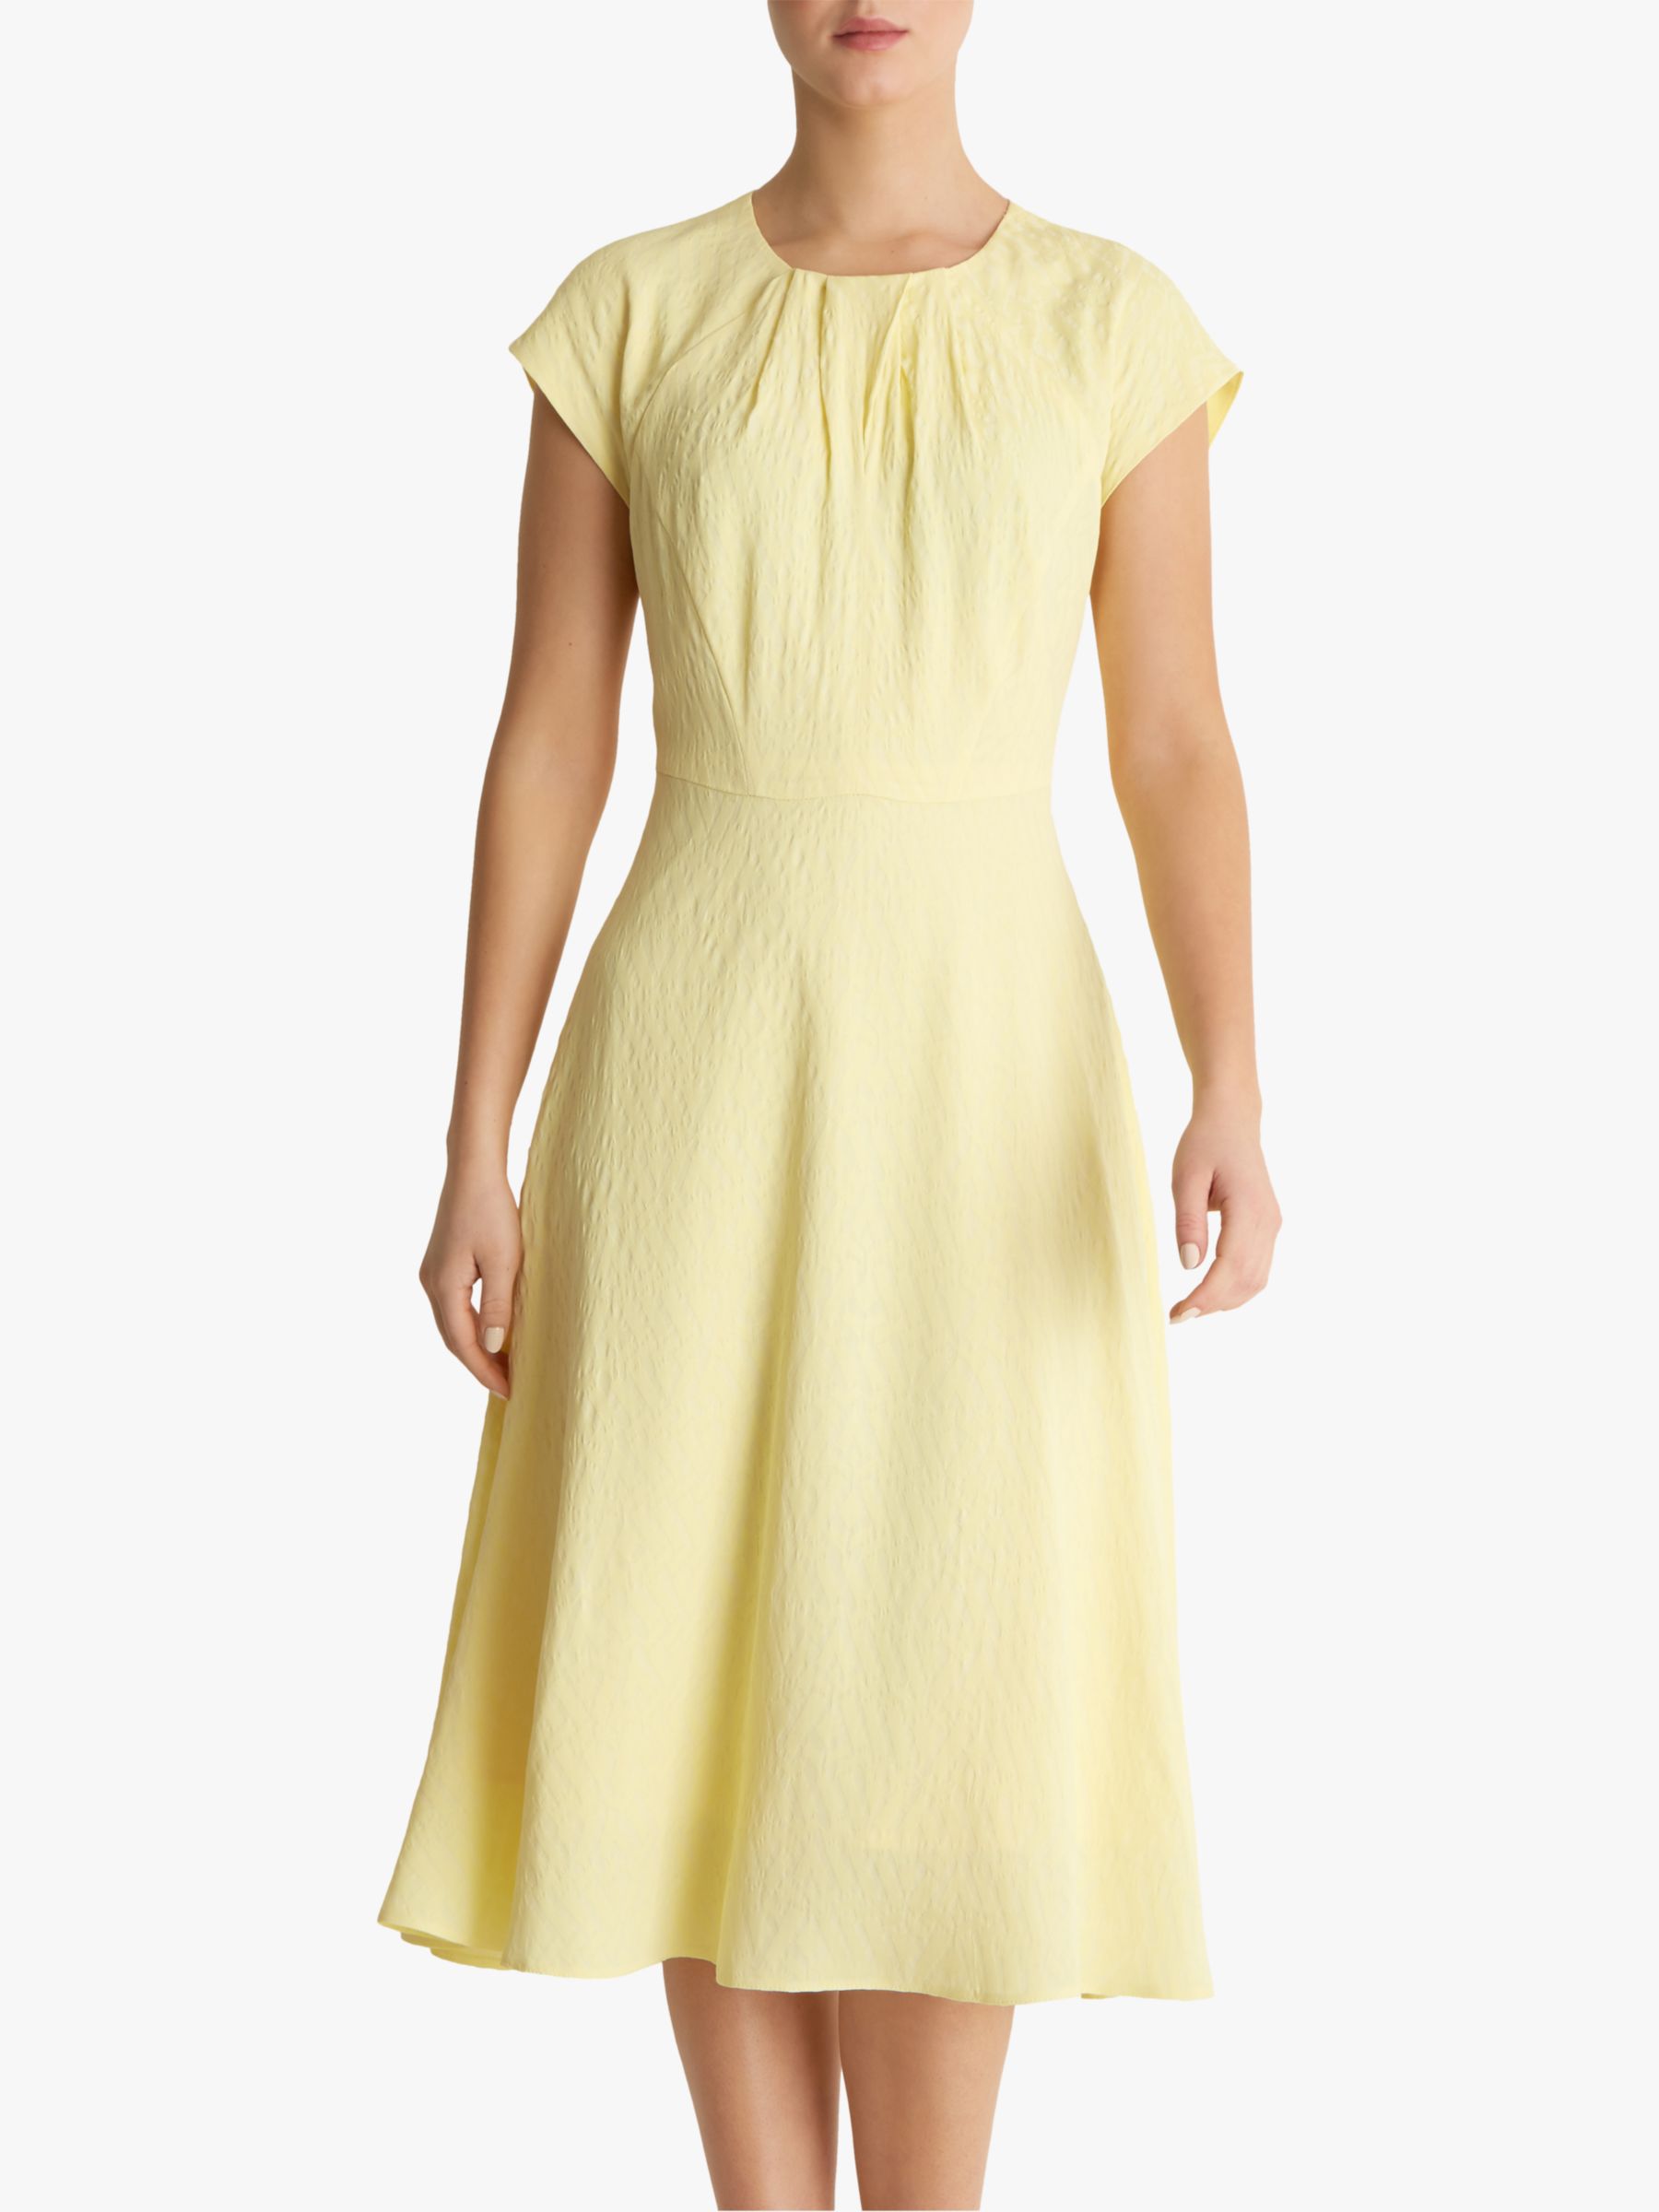 Fenn Wright Manson Petite Tally Dress, Lemon